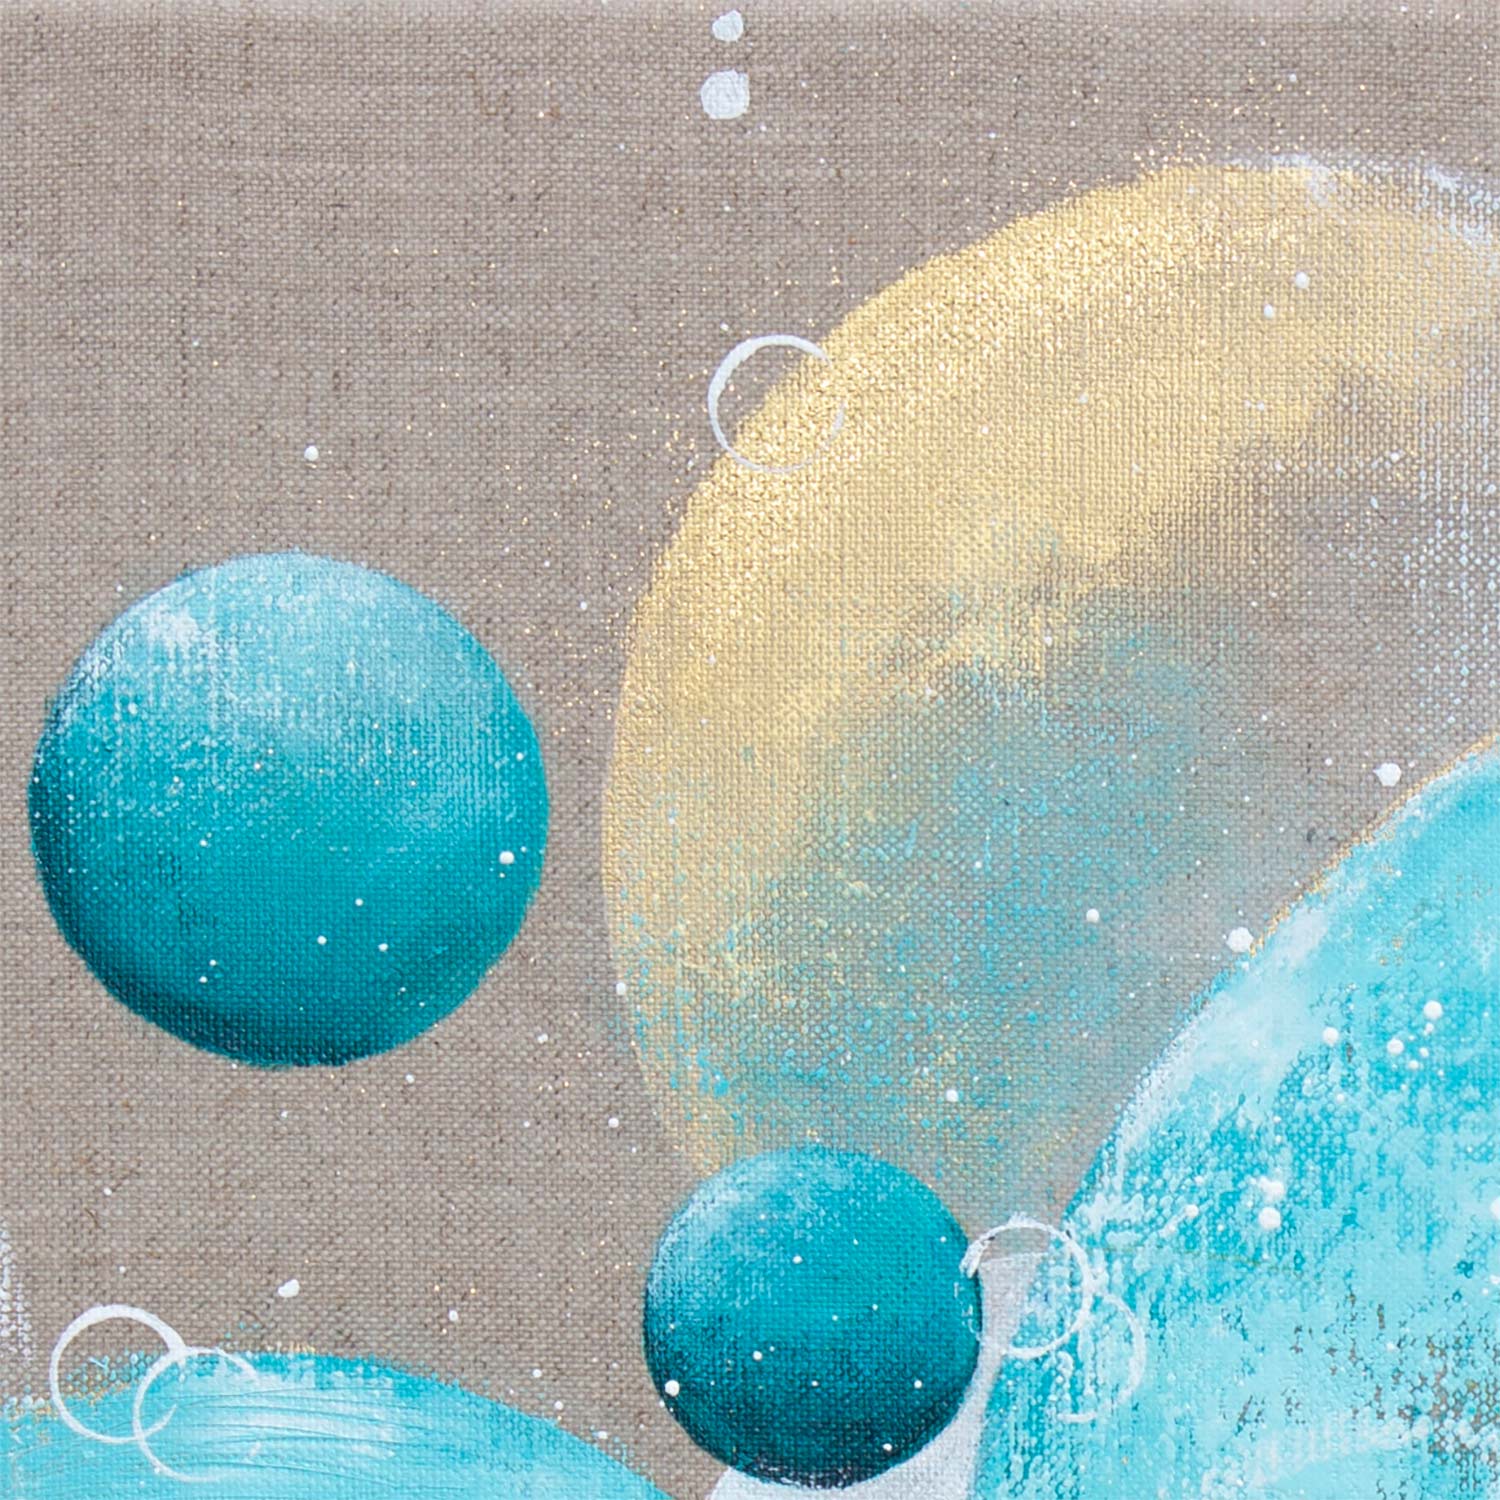 Riptide Moonbathing Painting 40cm x 50cm on Raw Linen Canvas